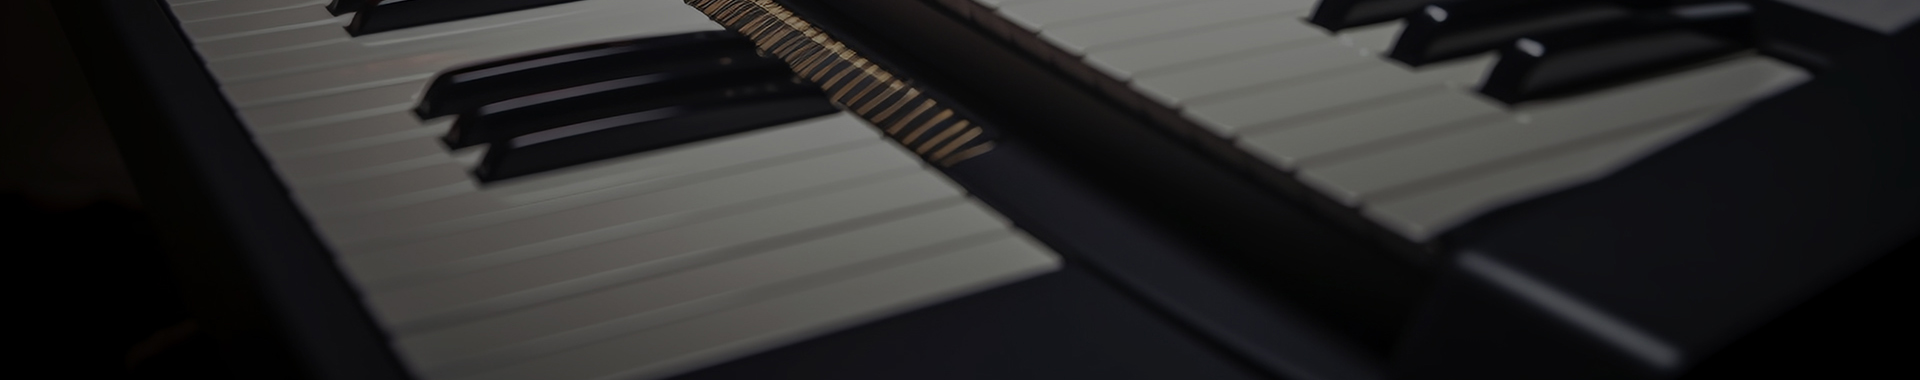 88 Keys Electronic Piano Keyboard PH88S MIDI Output Built-in Speakers Beginner